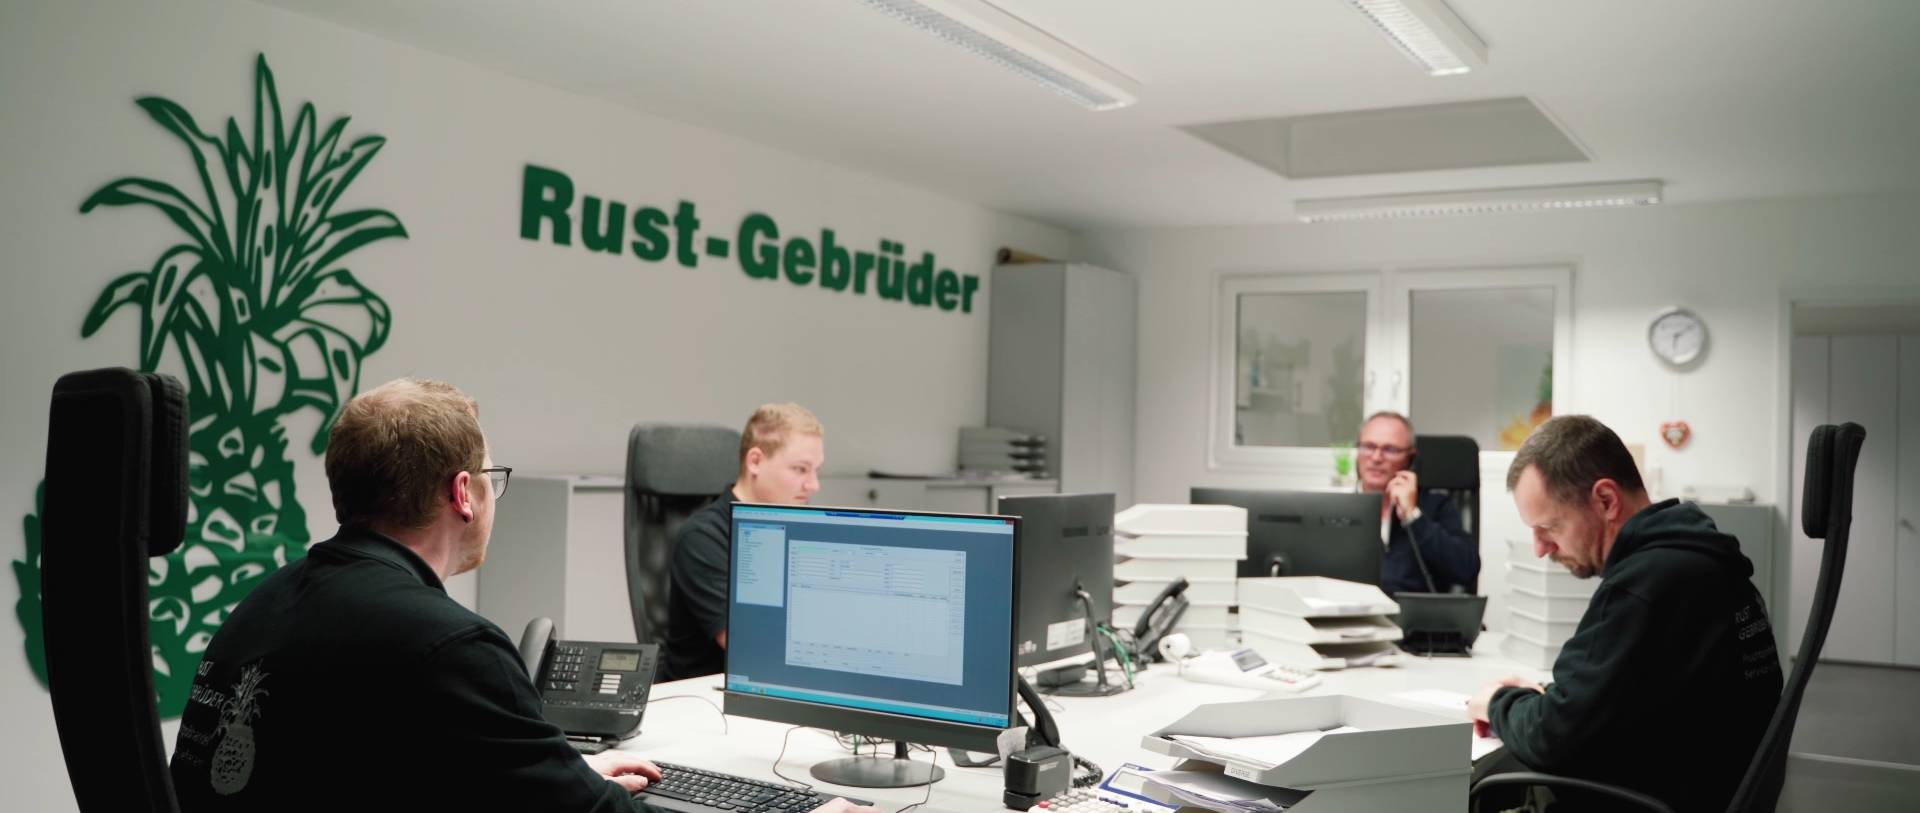 Rust Gebrüder GmbH